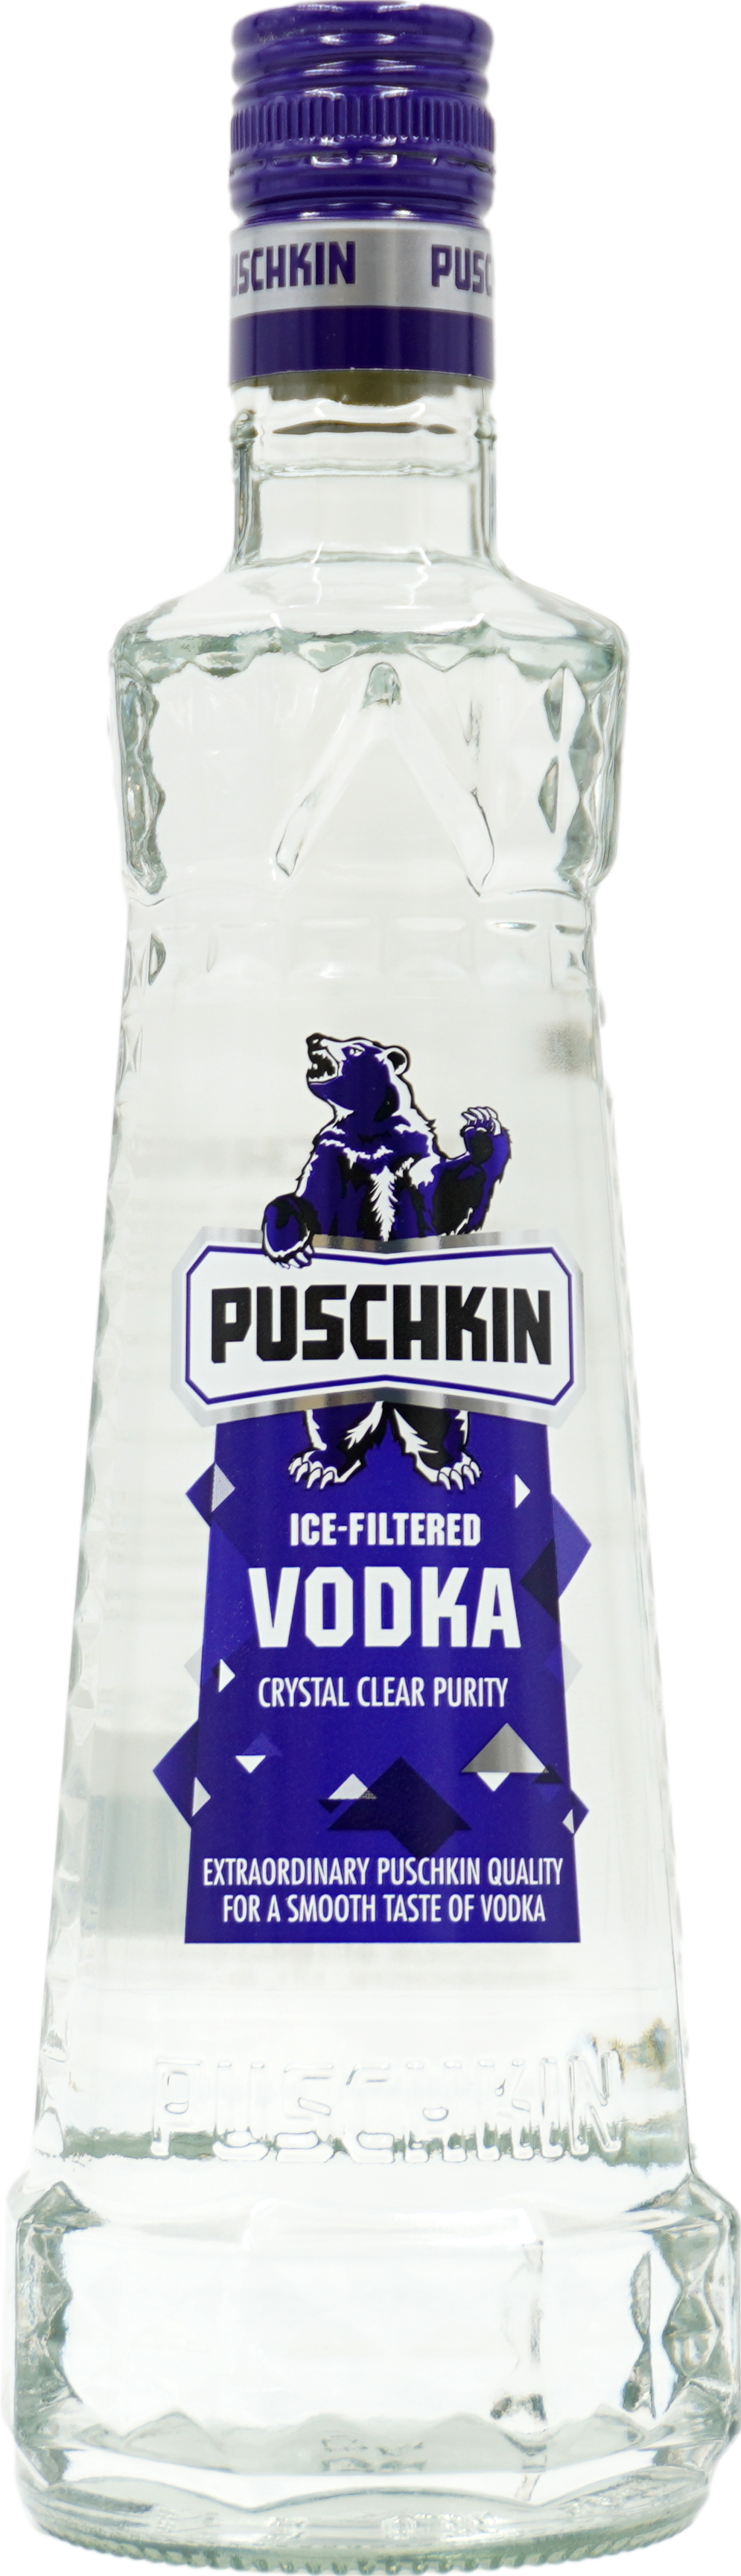 | Getränke-Service | Puschkin Vodka 37,5% KACHOURI Wodka Spirituosen |